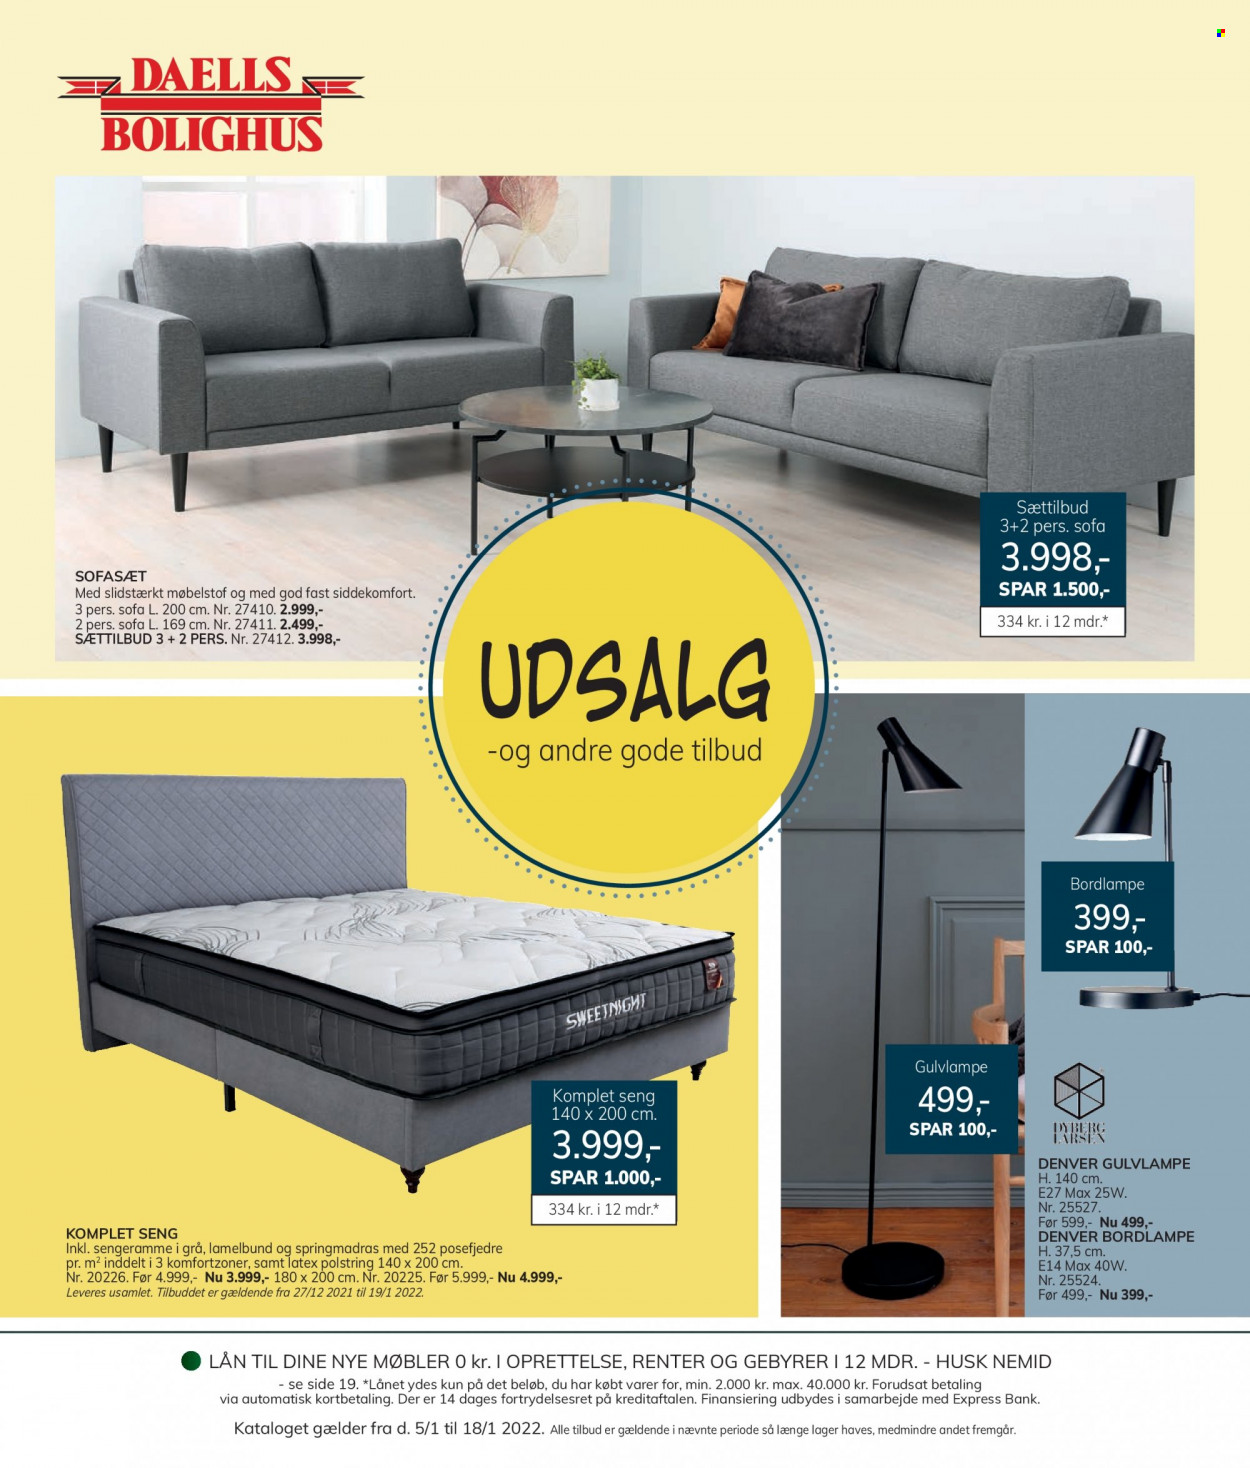 Daells Bolighus tilbud  - 05.01.2022 - 18.01.2022 - tilbudsprodukter - sofa, sofasæt, seng, bordlampe, gulvlampe. Side 1.